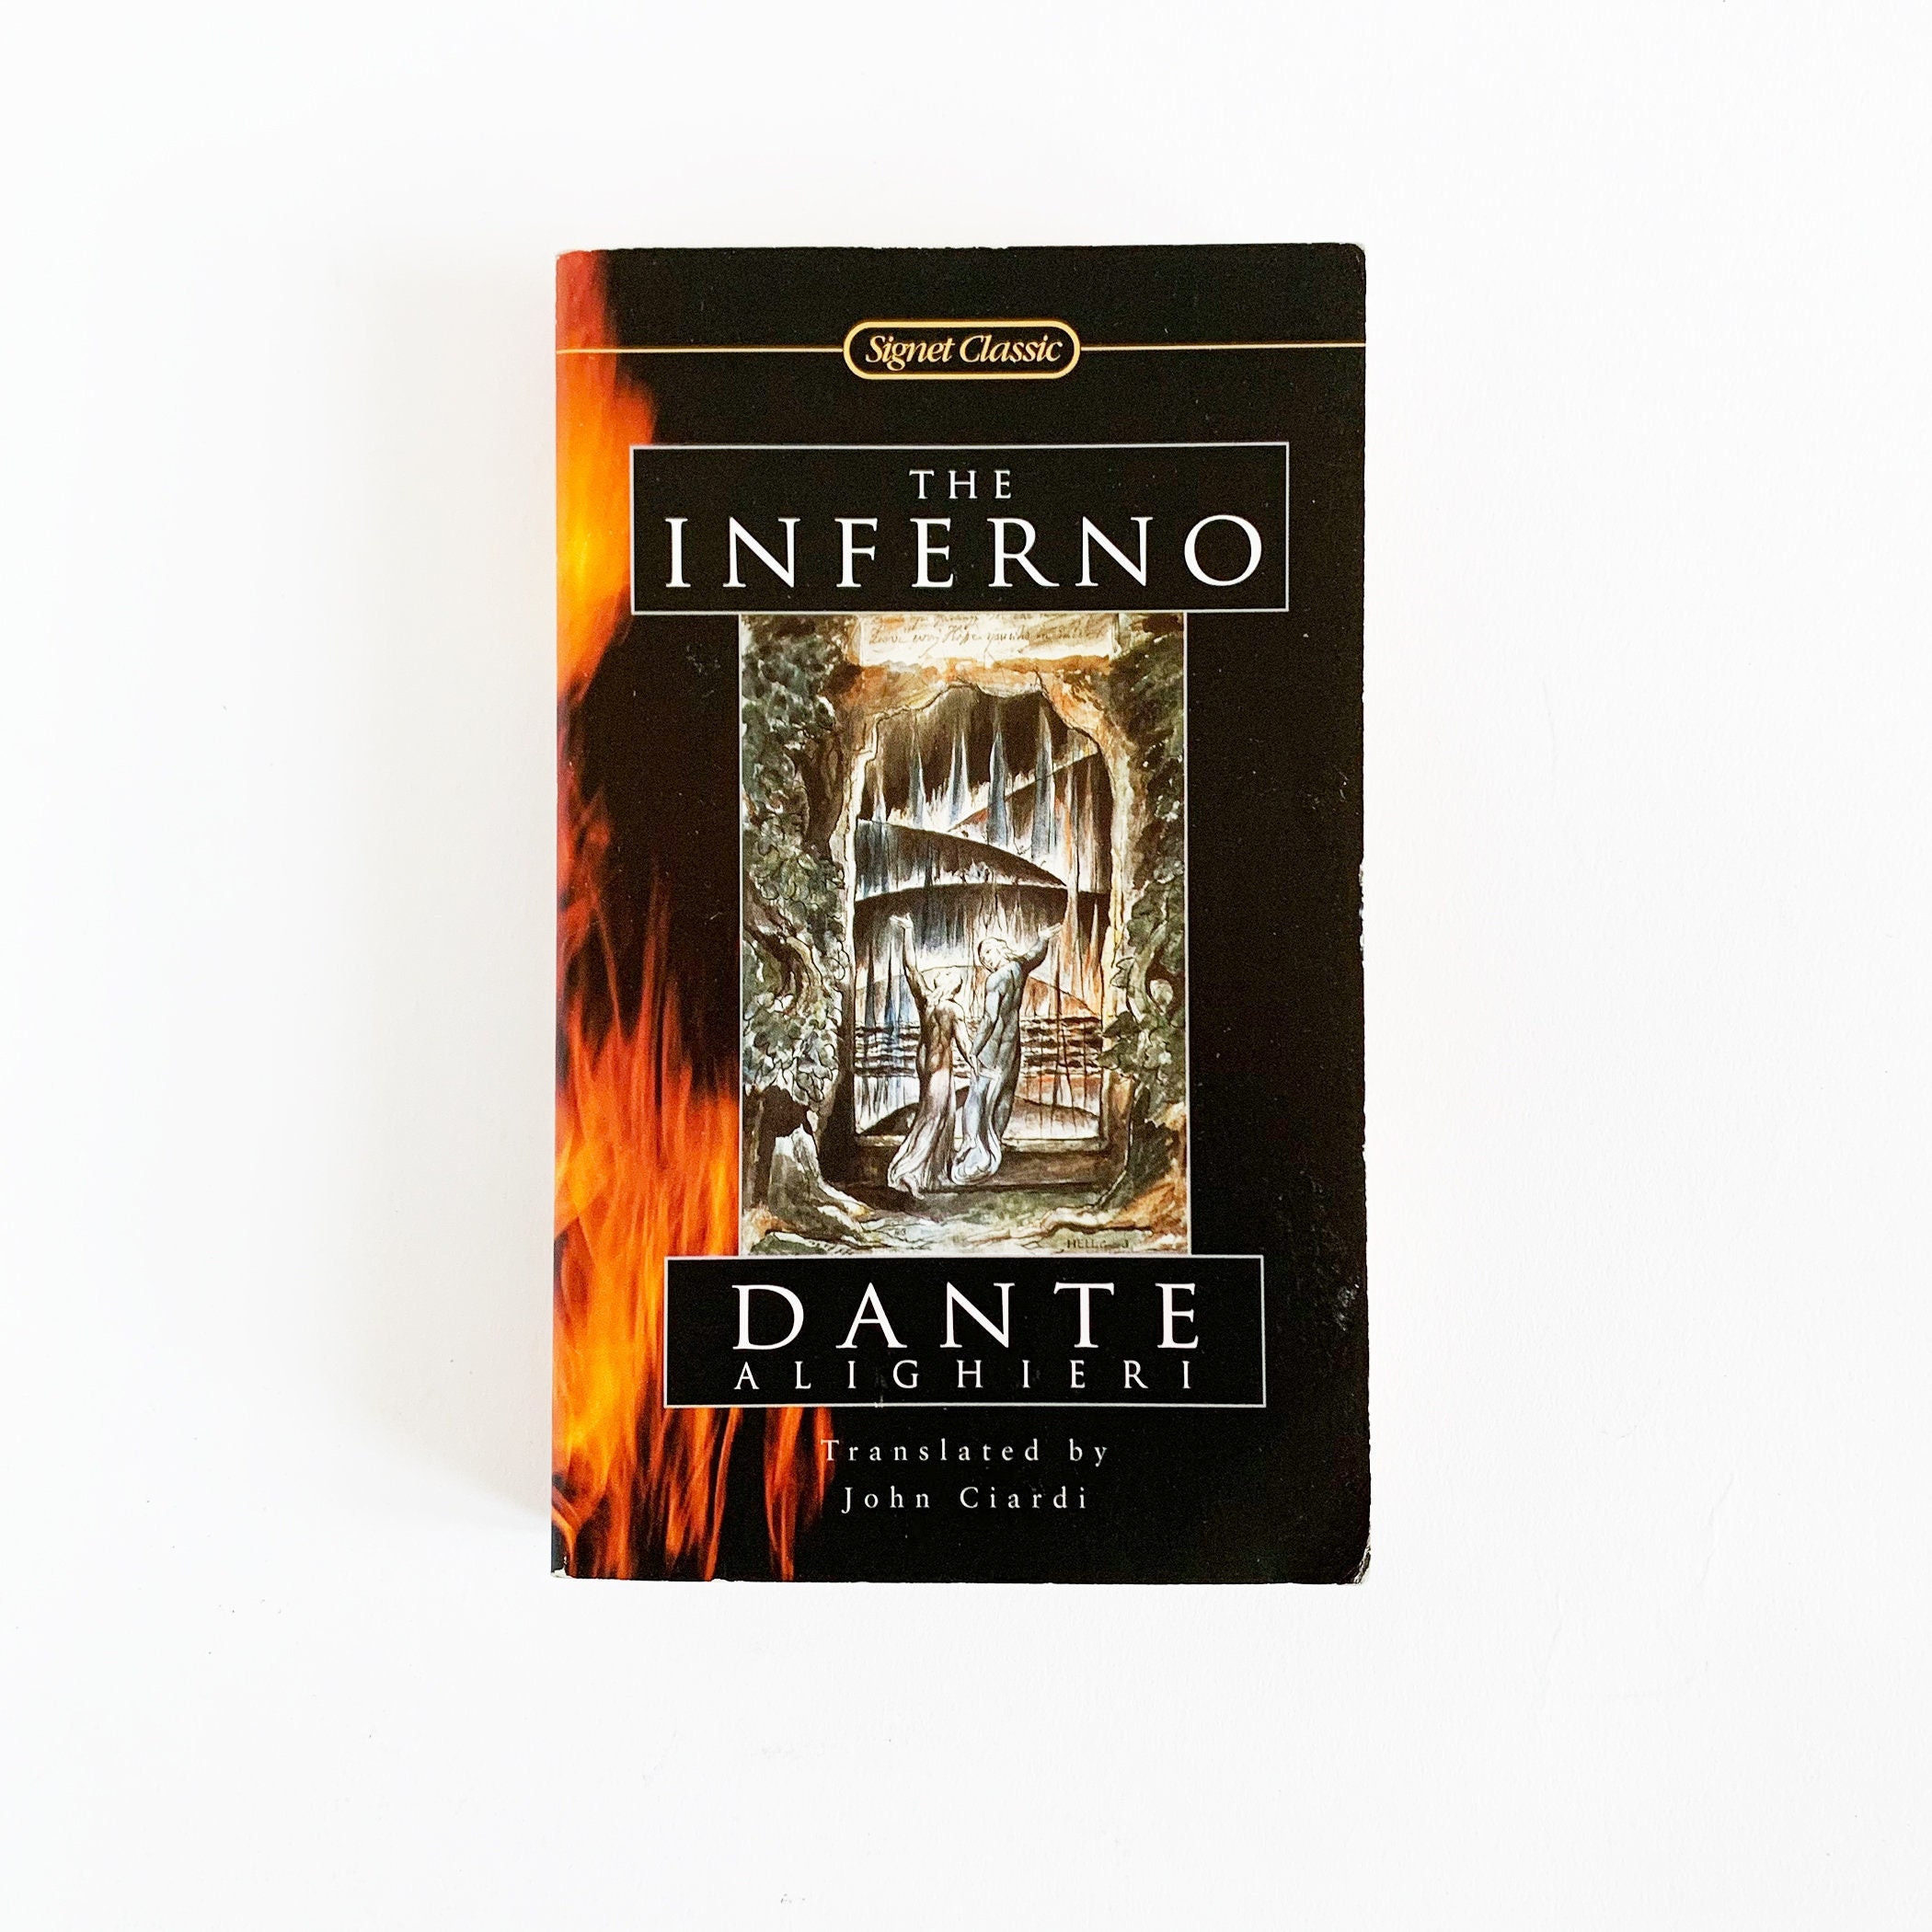 Dante's Inferno Blu-ray (France)